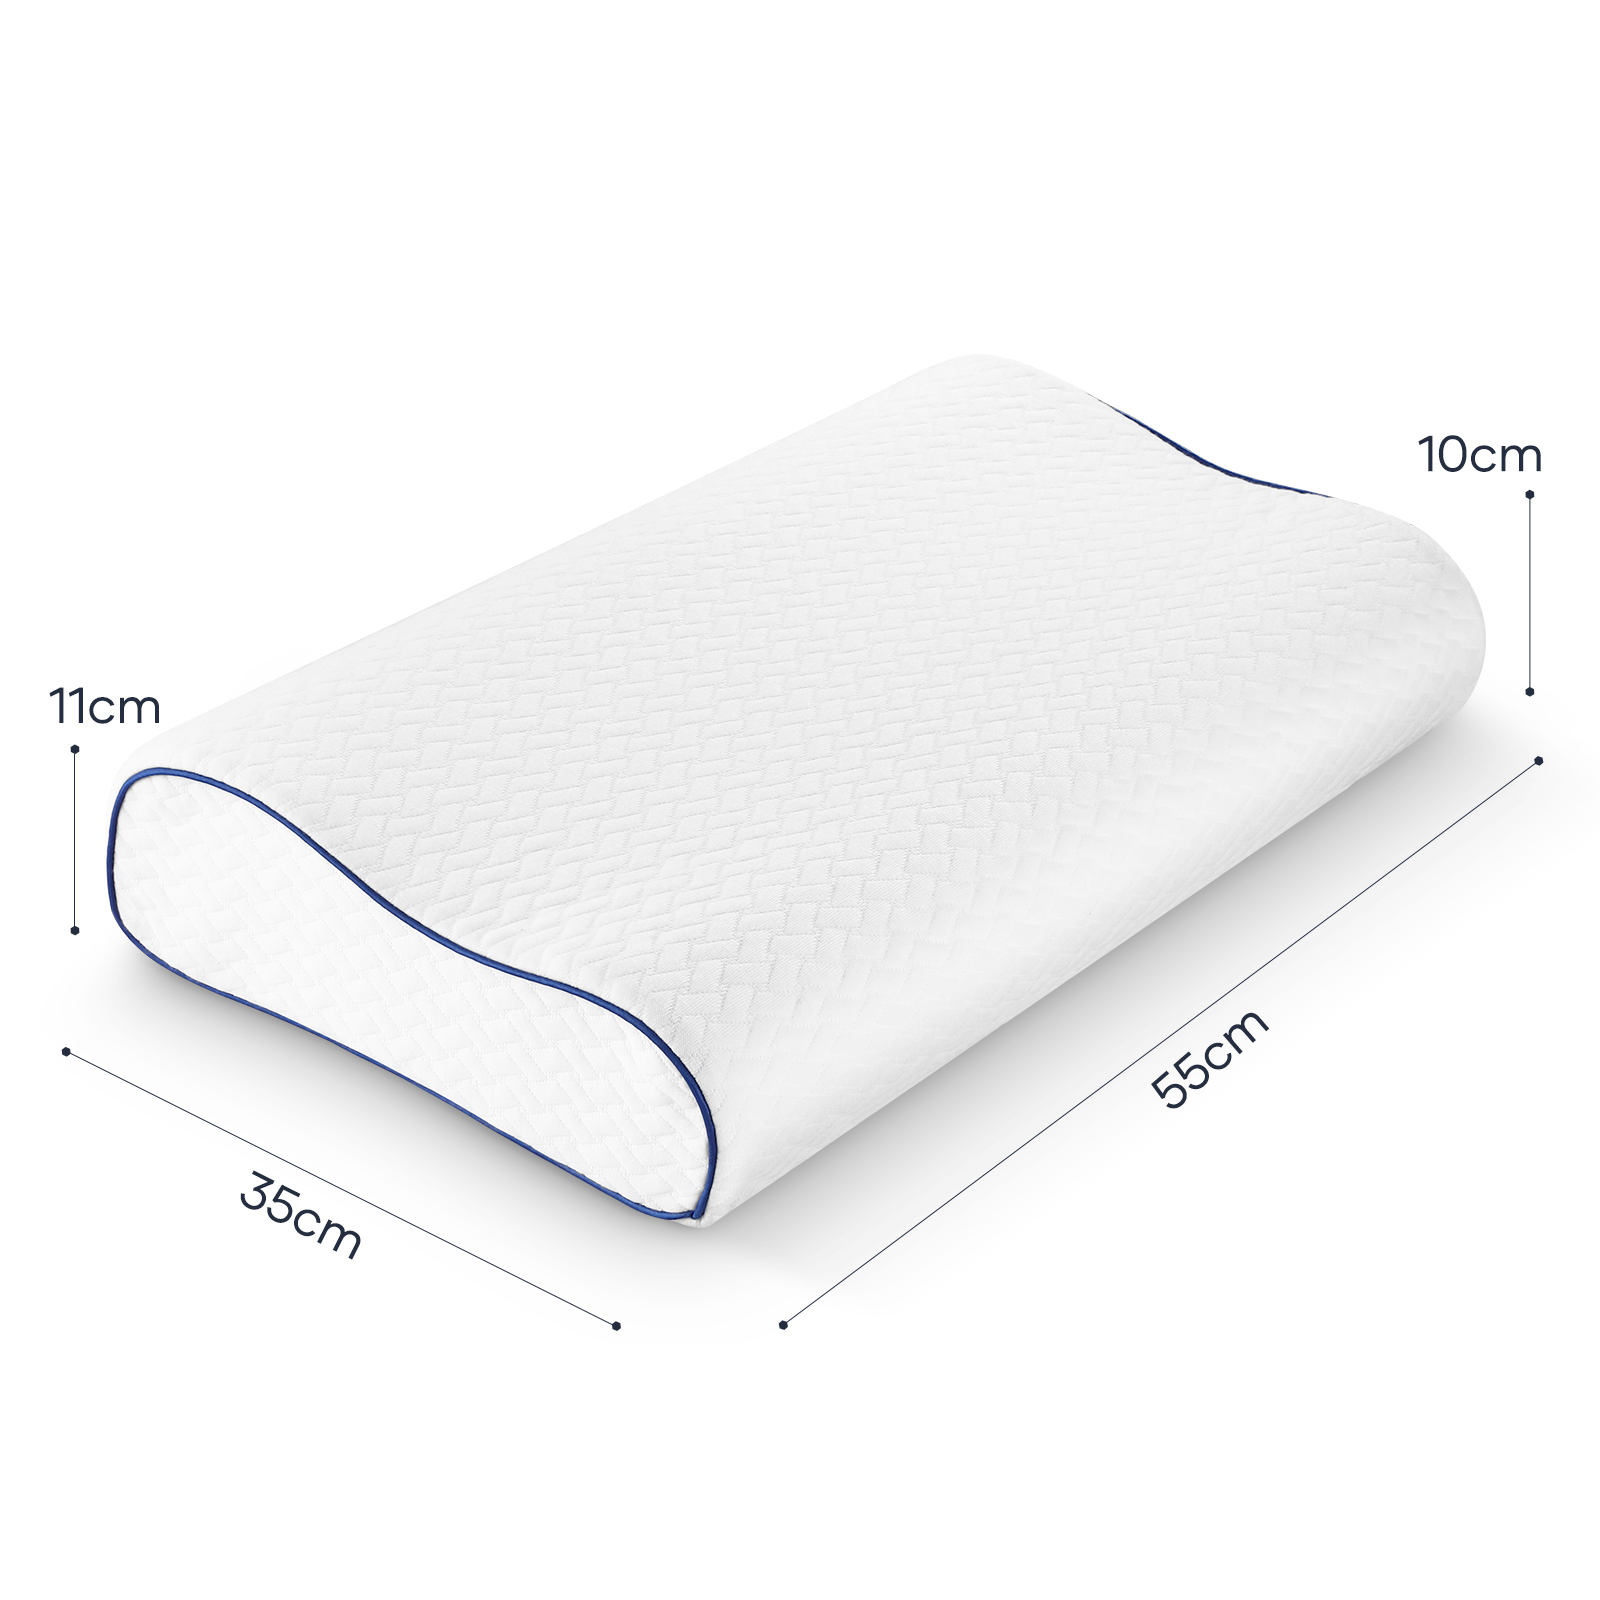 Luxdream Ergonomic Memory Foam Pillow